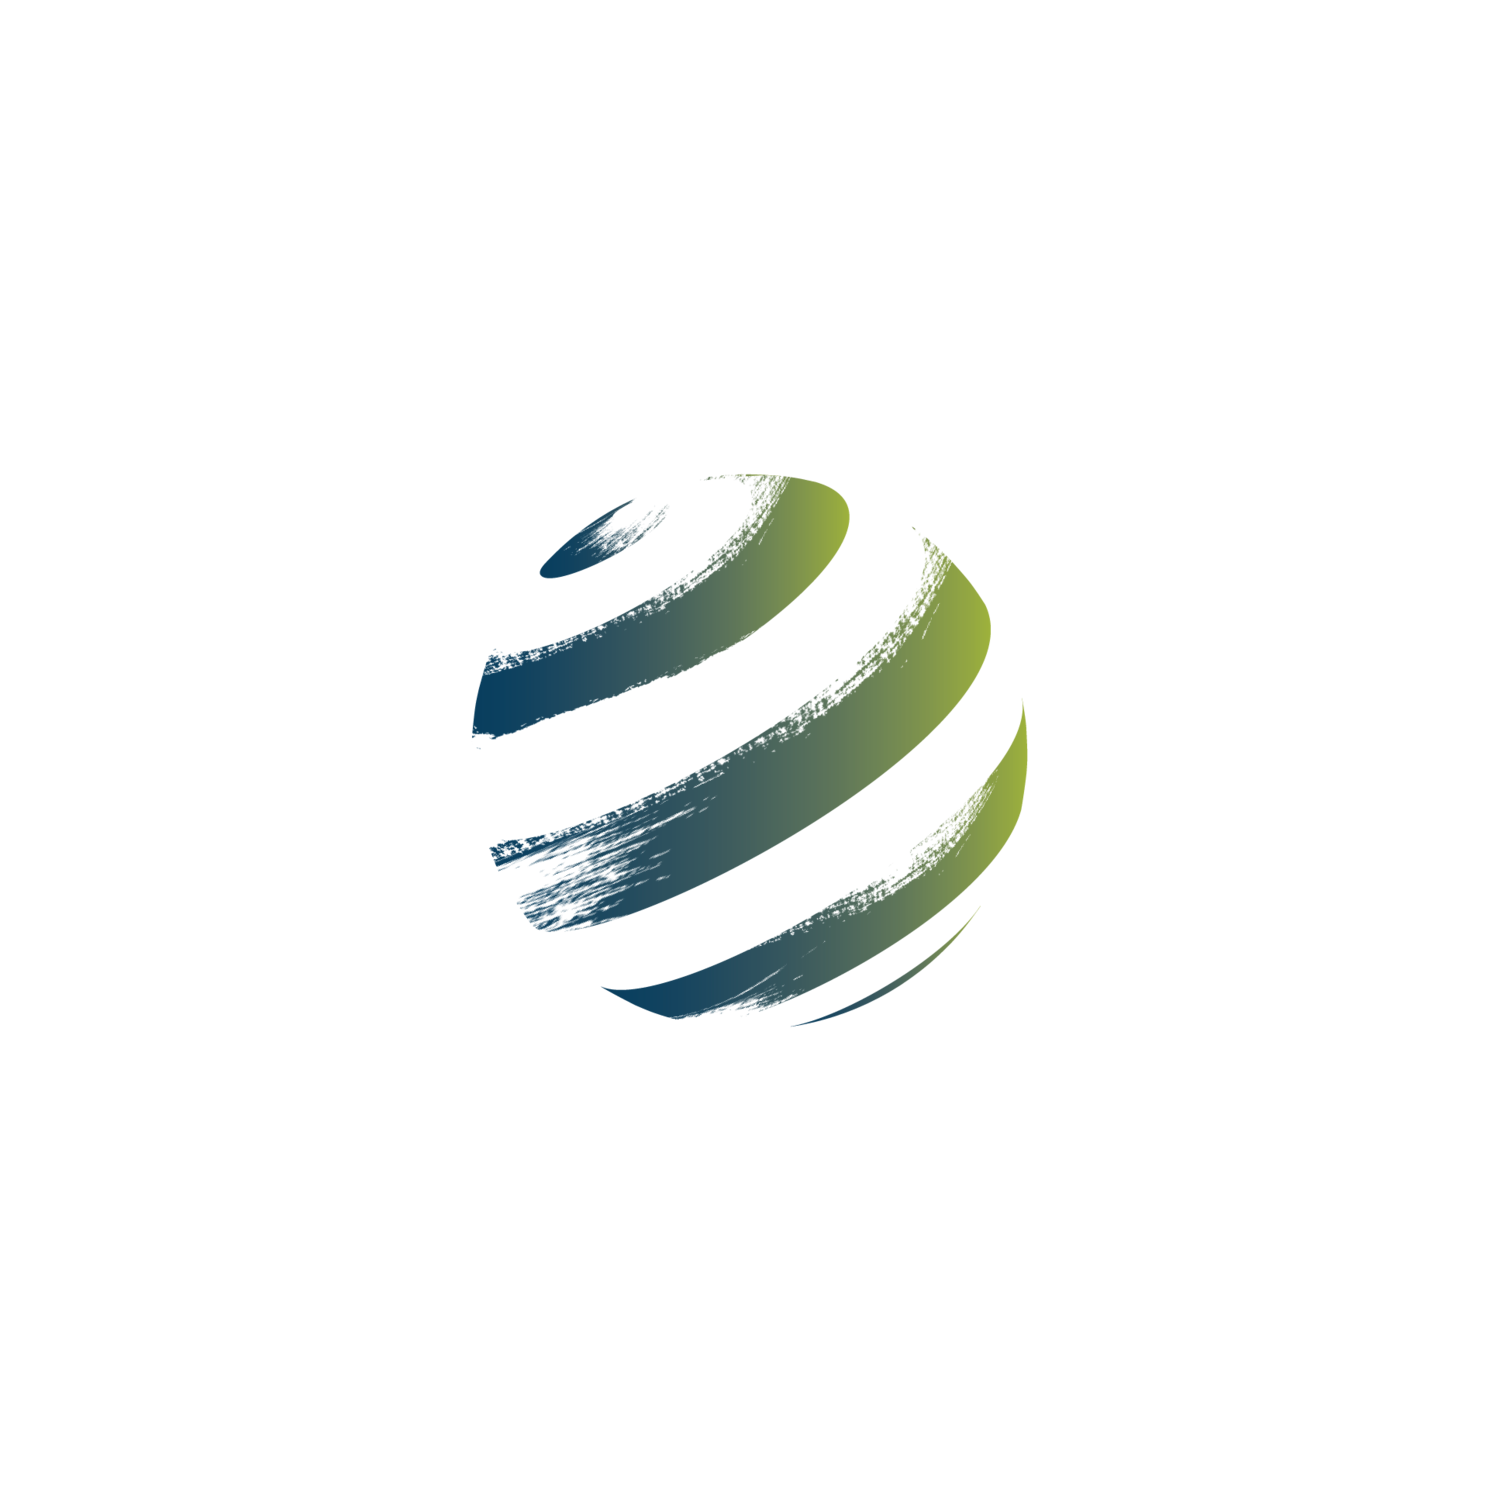 School Travel Collective